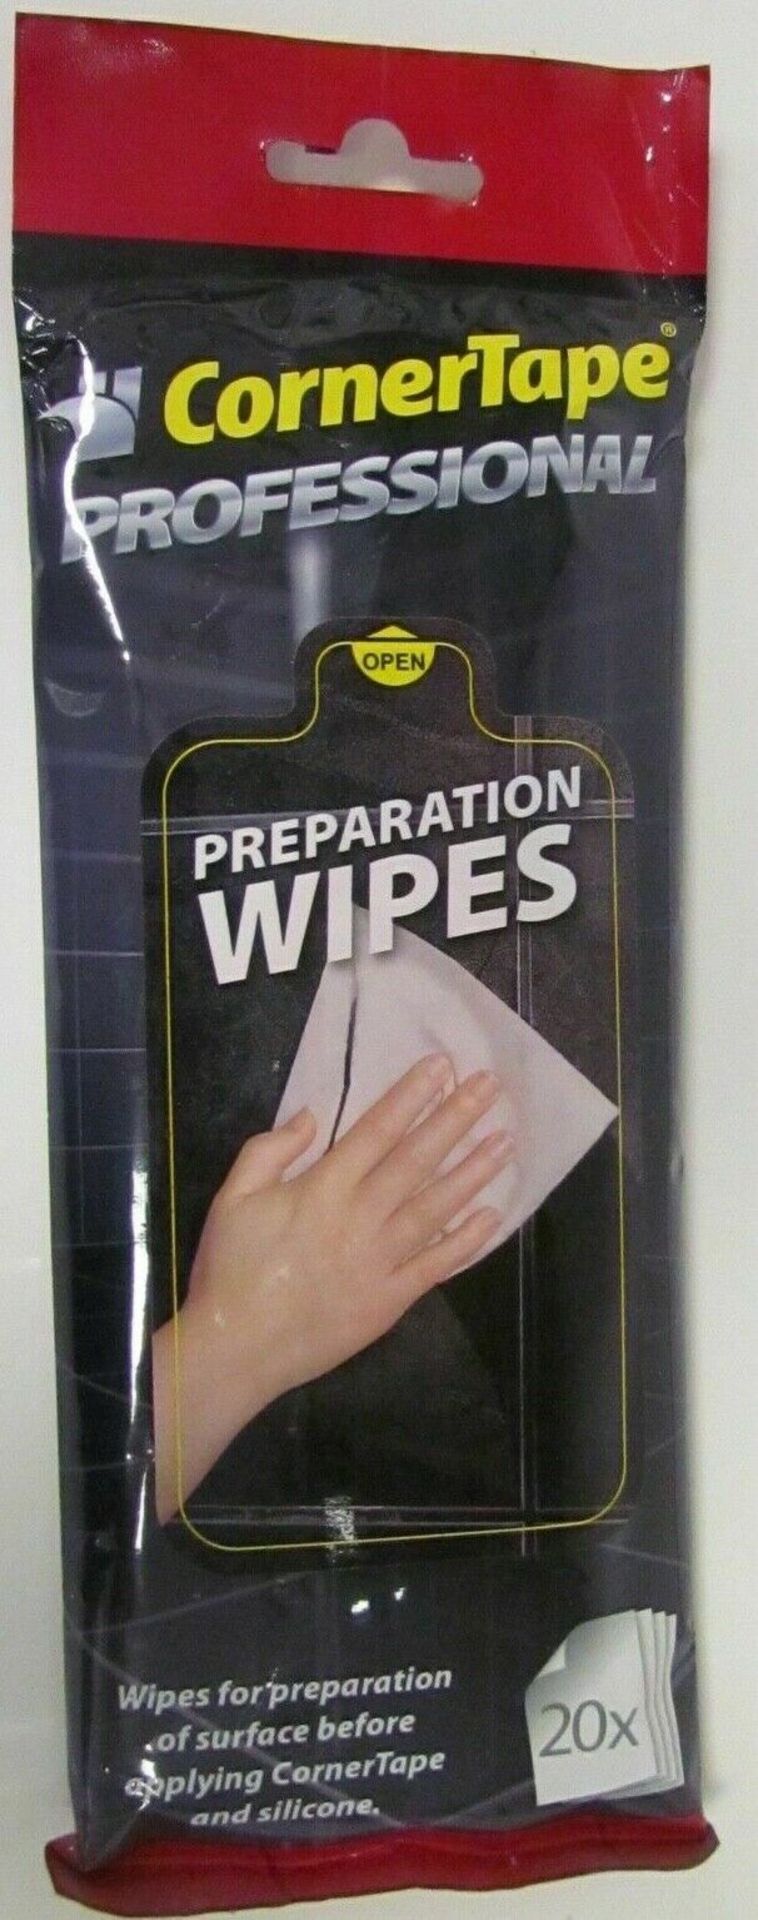 10 X Corner Tape Preperation Wipes 20 per pack x 10 packs total wipes = 200 - Image 3 of 5